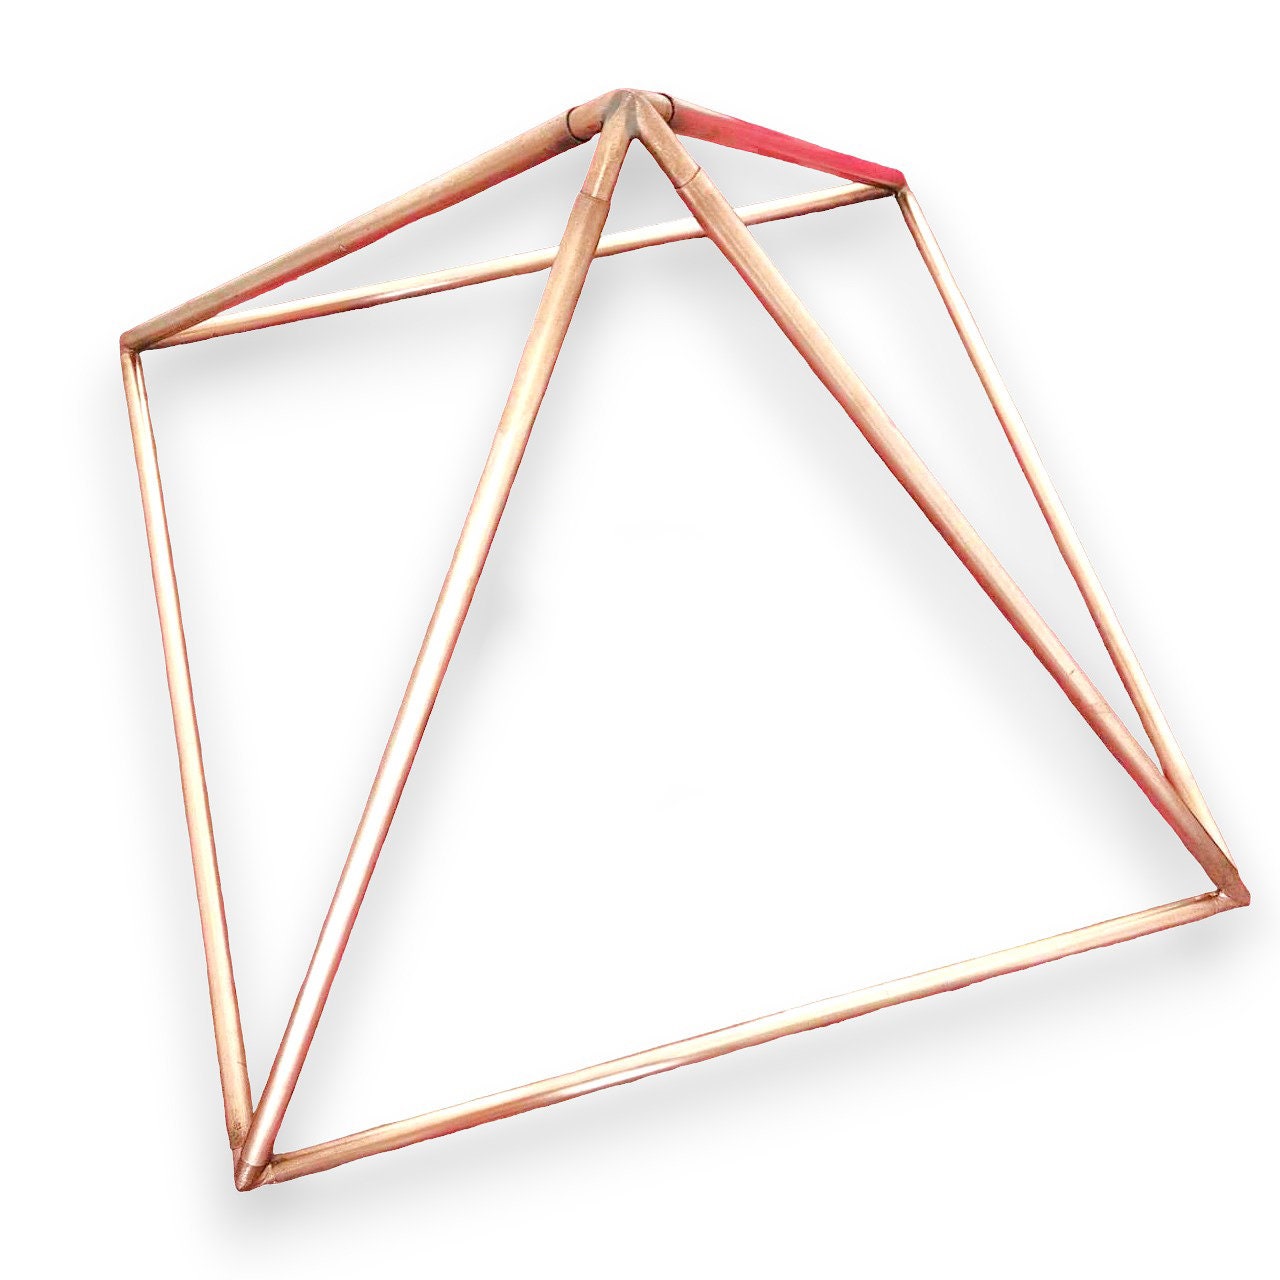 Solid Copper Pyramid - 2 5/8 inch